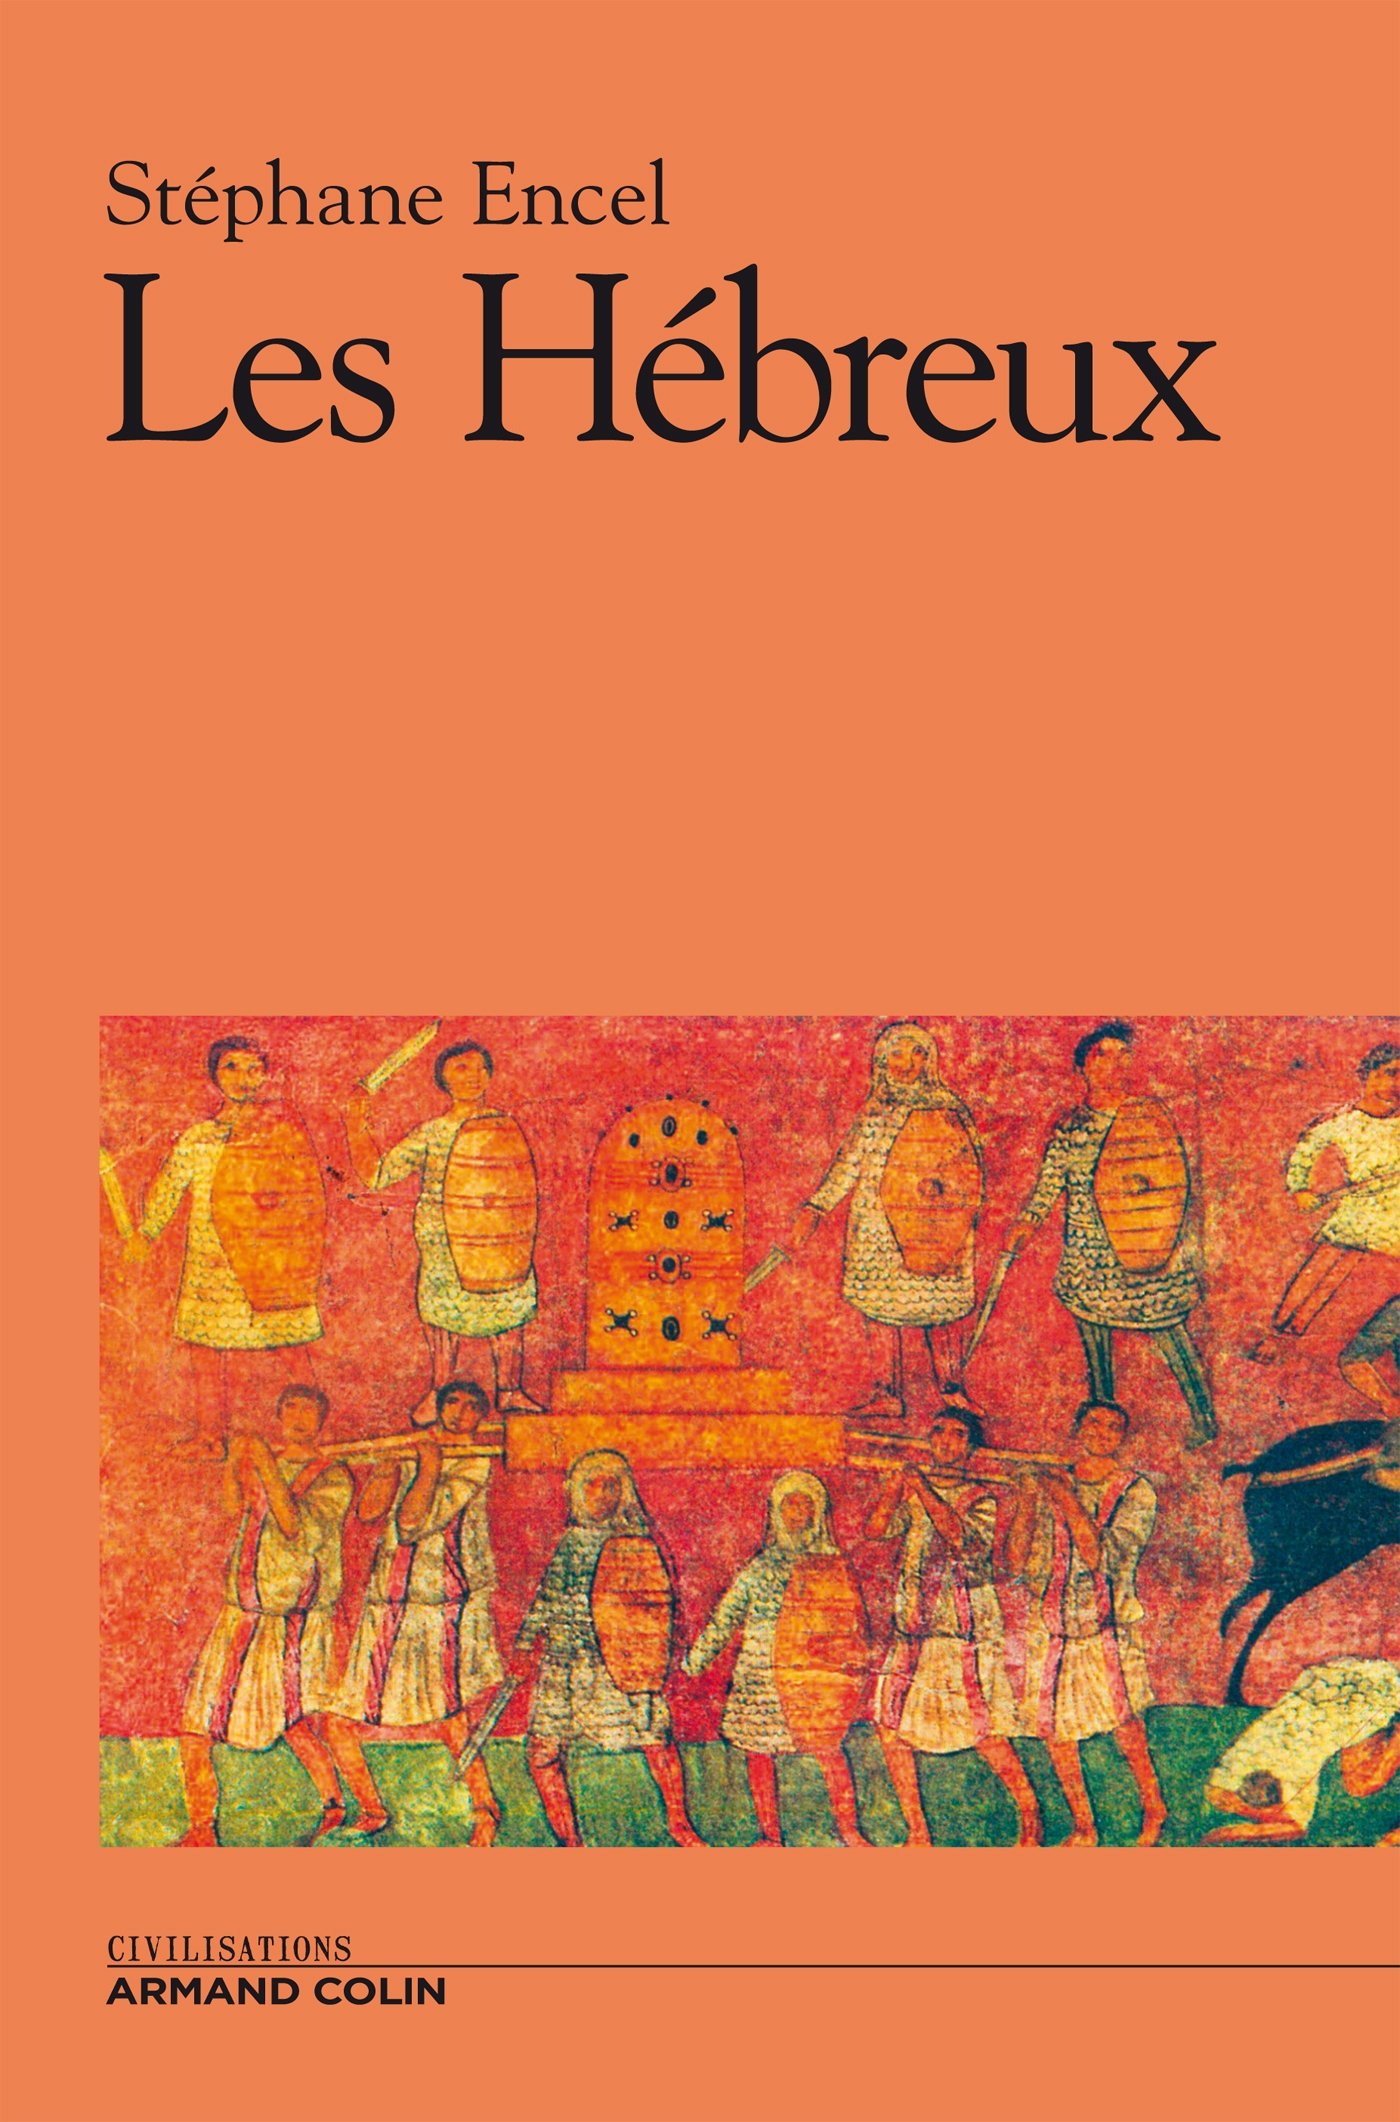 Les Hébreux, 2014, 416 p.